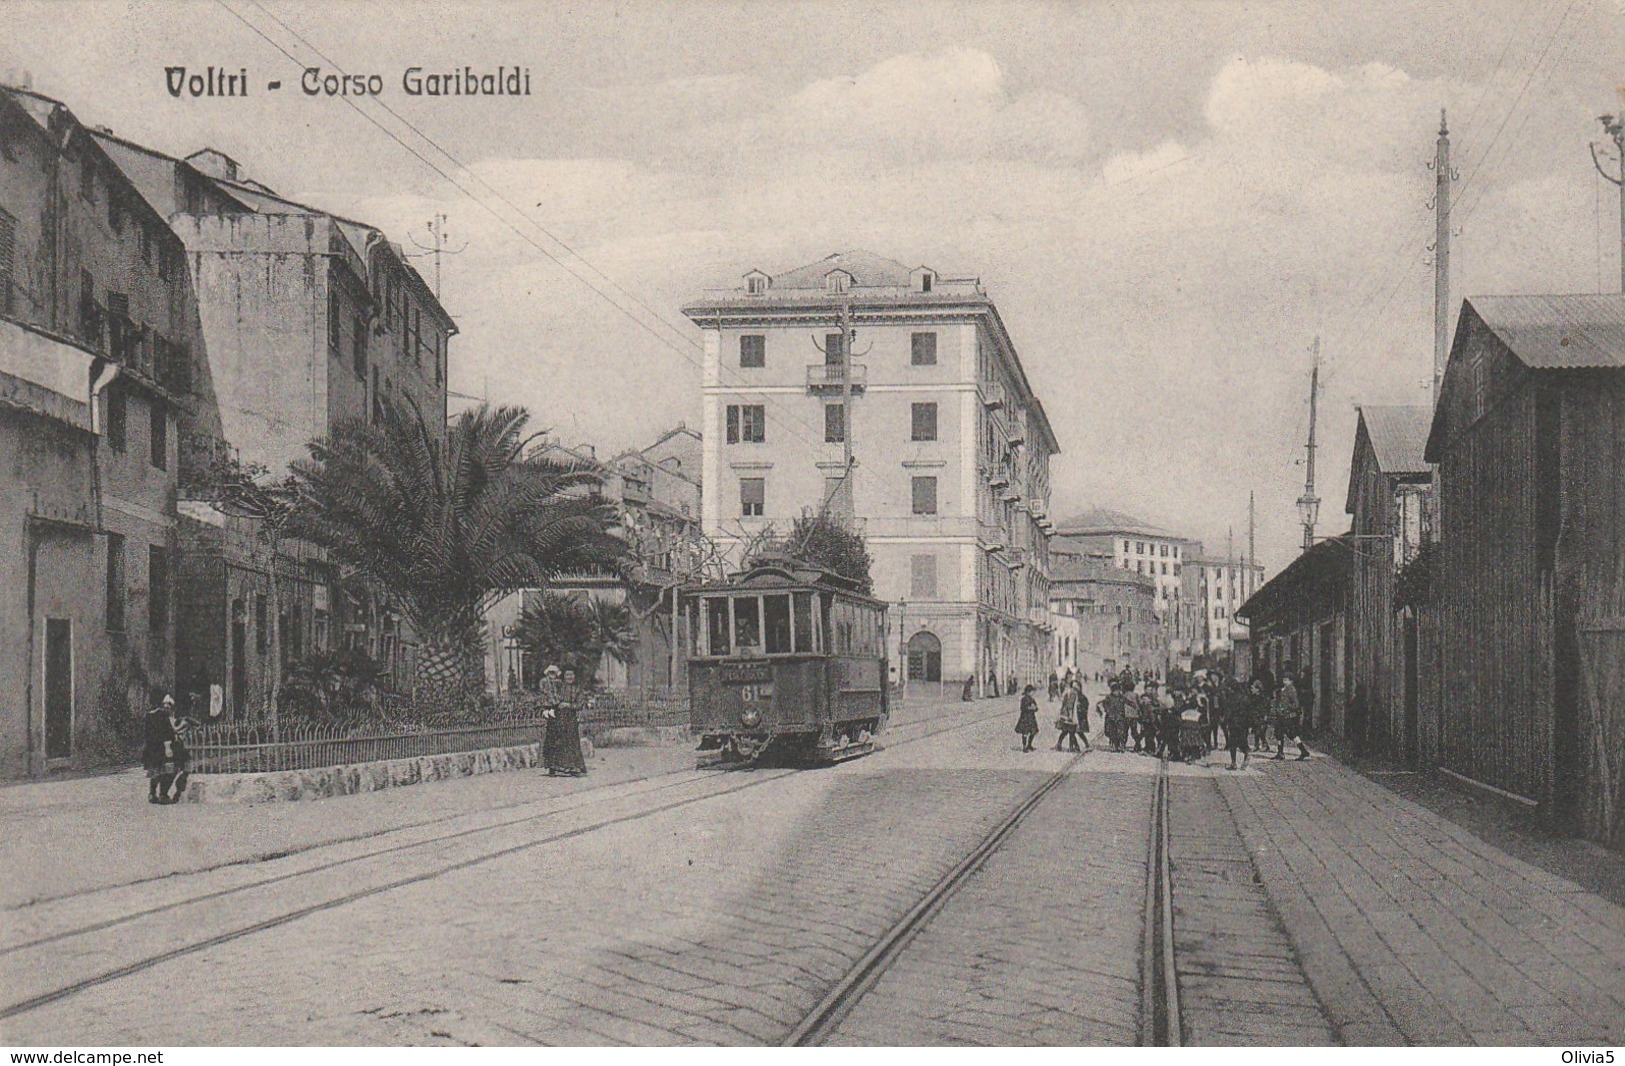 VOLTRI - CORSO GARIBALDI - Genova (Genoa)